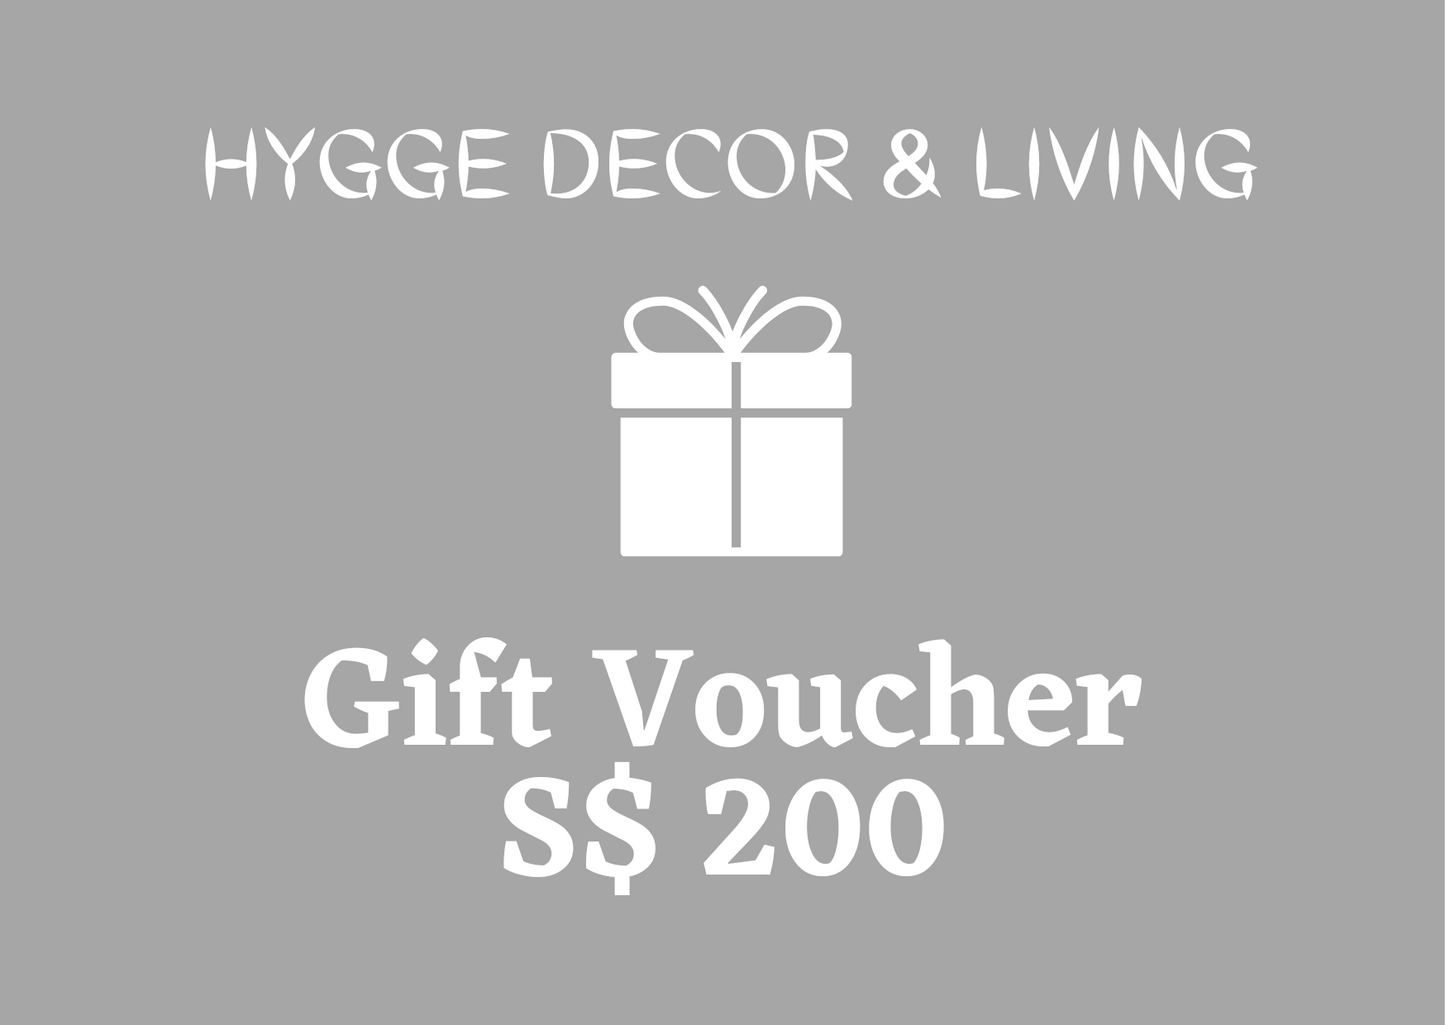 Hygge Decor & Living Gift Vouchers